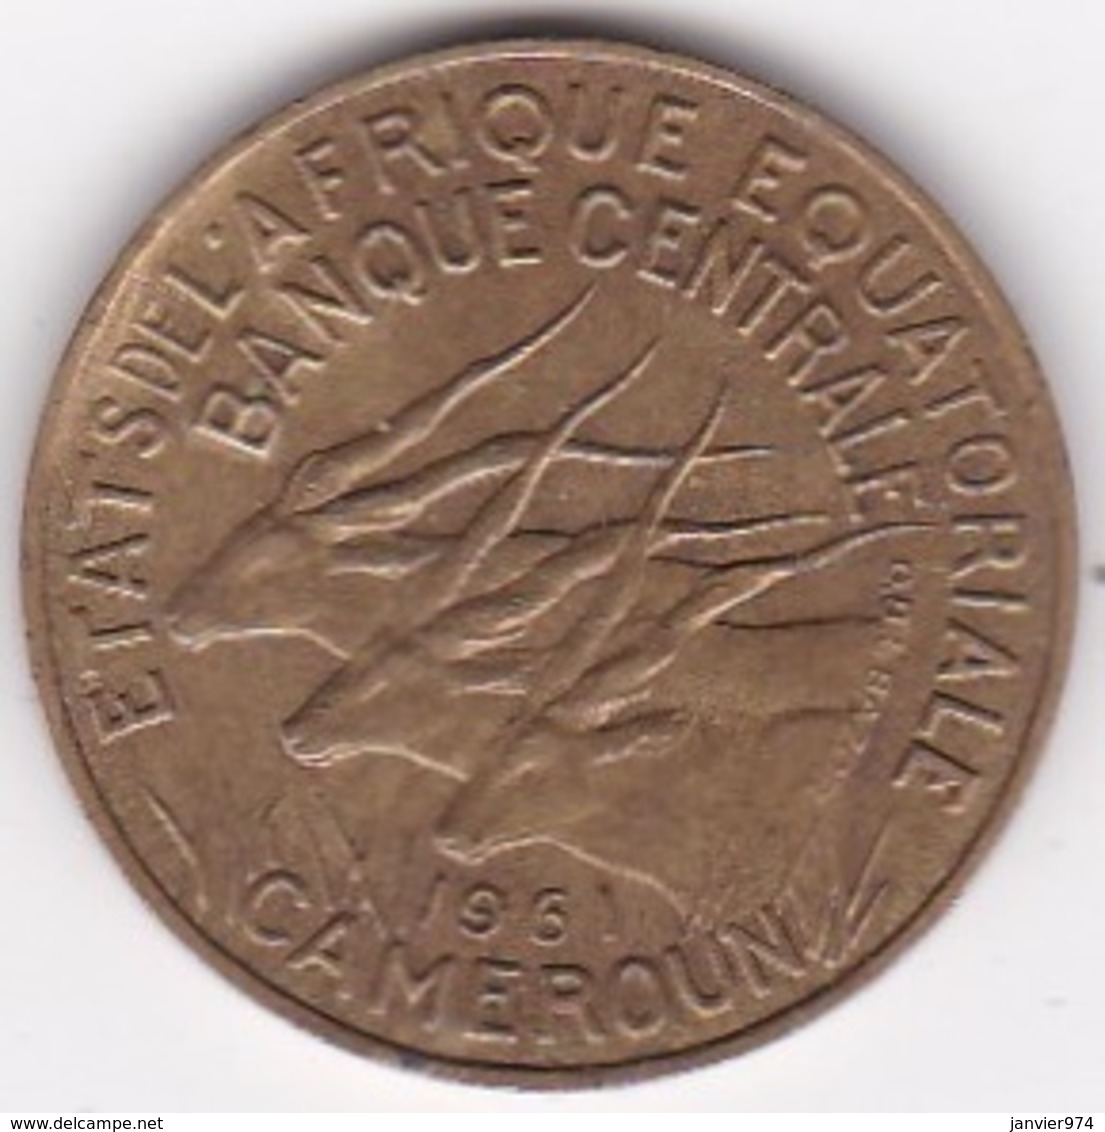 Cameroun, Afrique Equatoriale Française, 10 FRANCS 1961 - Cameroun